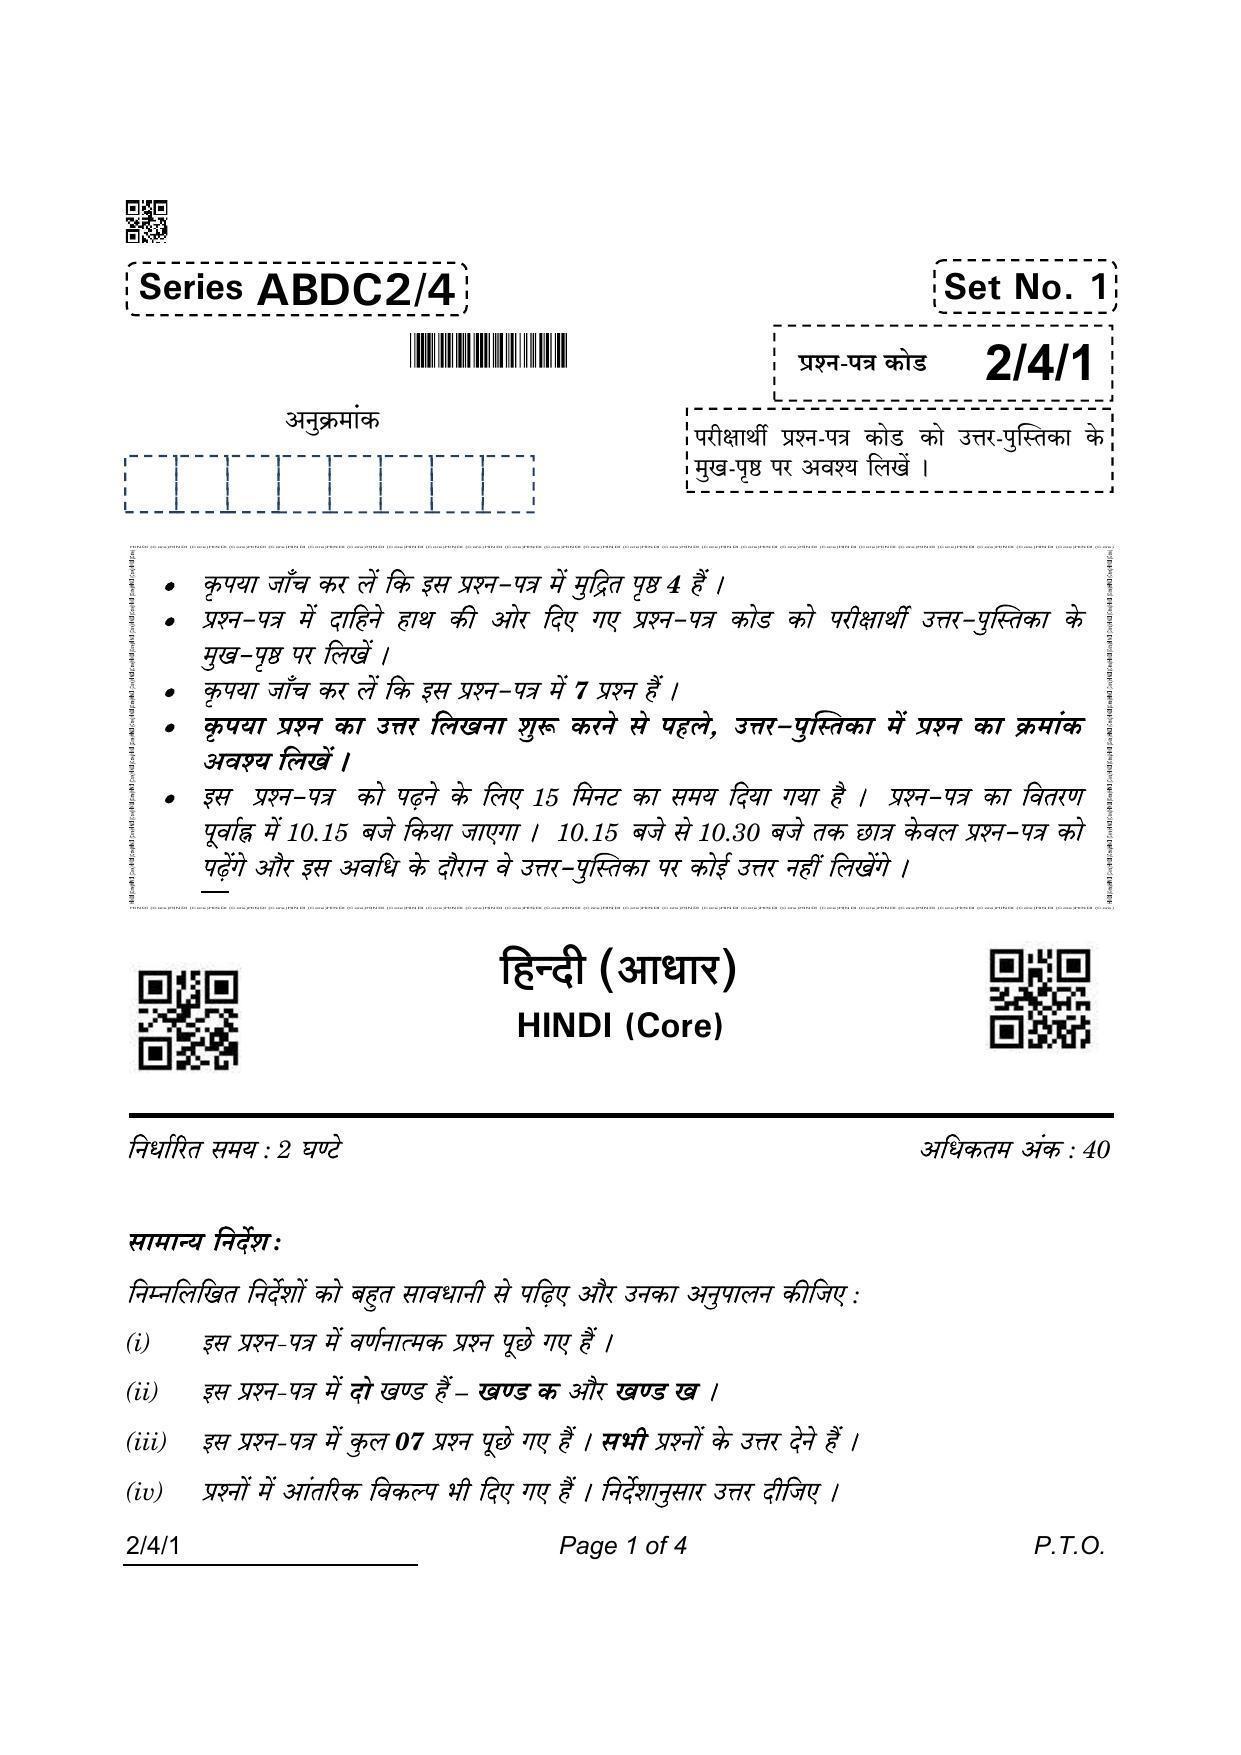 CBSE Class 12 2-4-1 Hindi Core 2022 Question Paper - Page 1